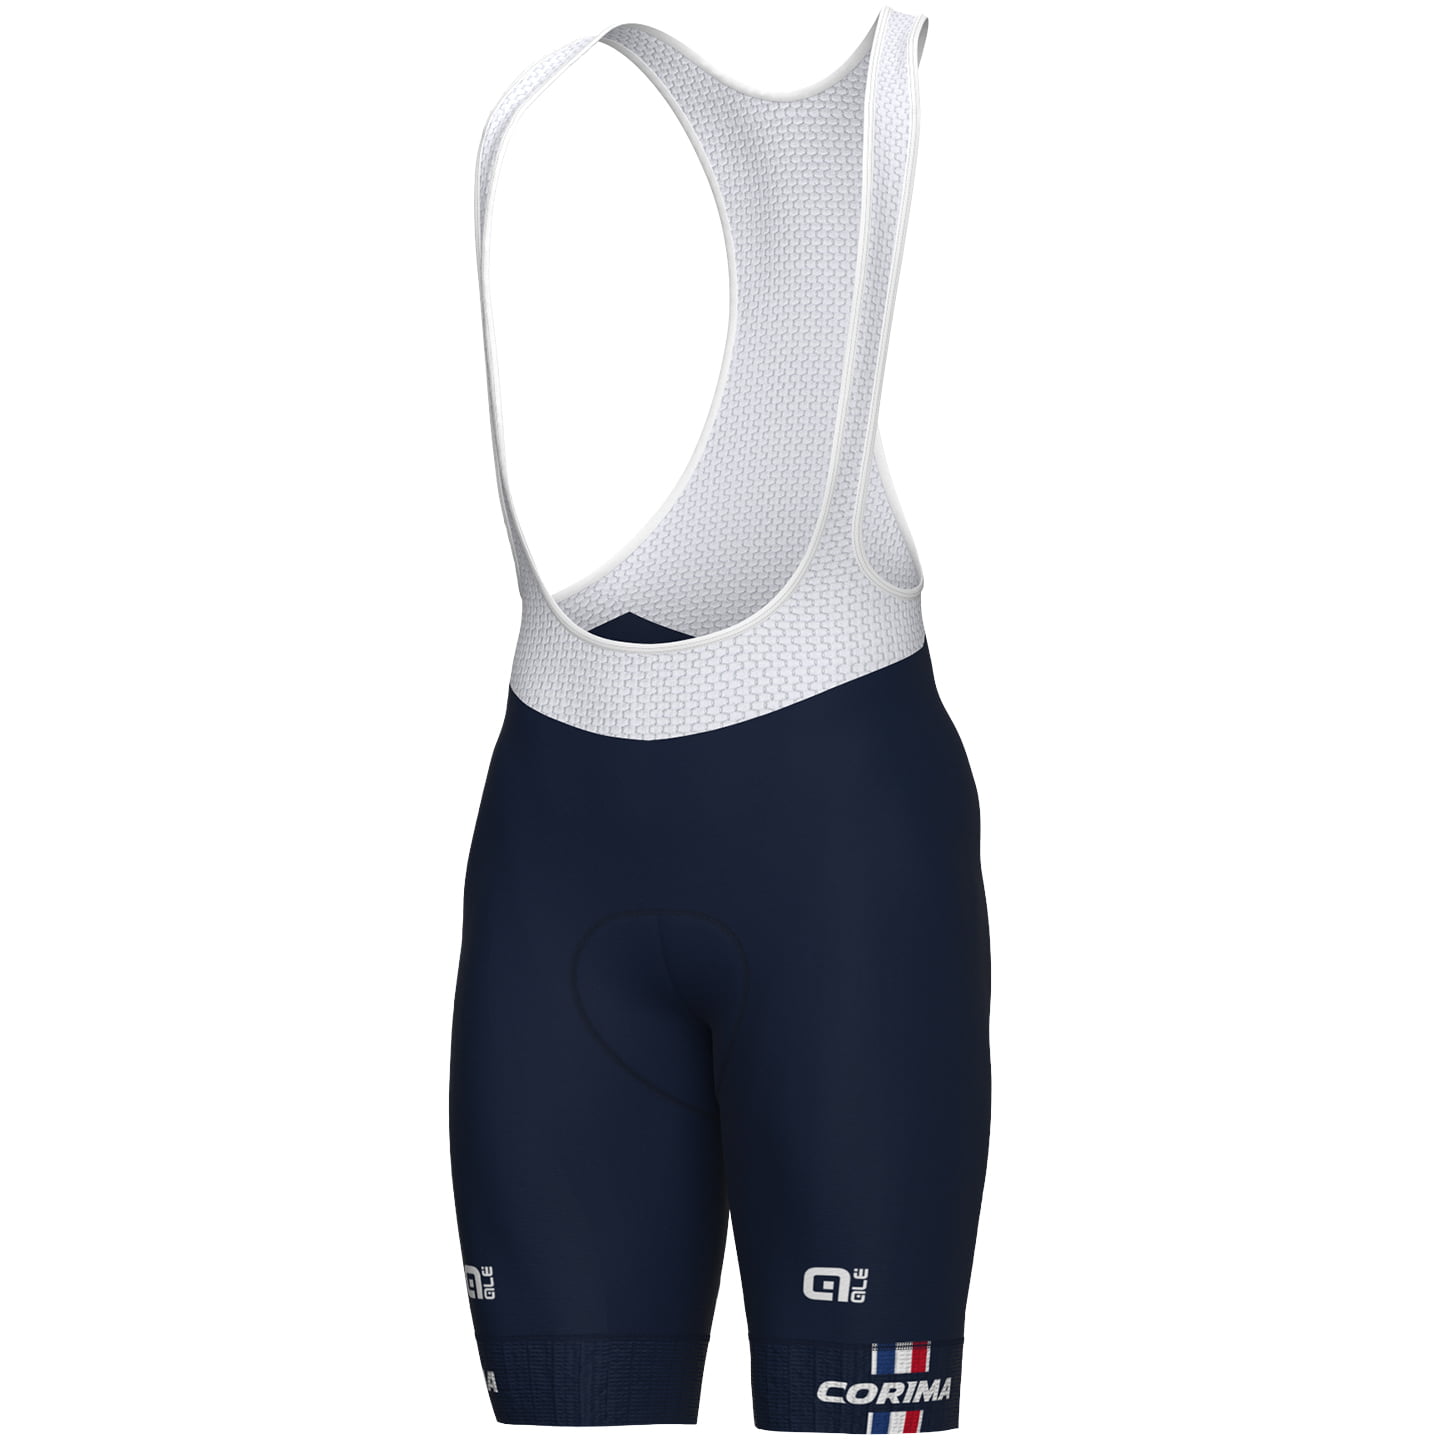 FRENCH NATIONAL TEAM 2023 Bib Shorts, for men, size 3XL, Cycling bibs, Bike gear